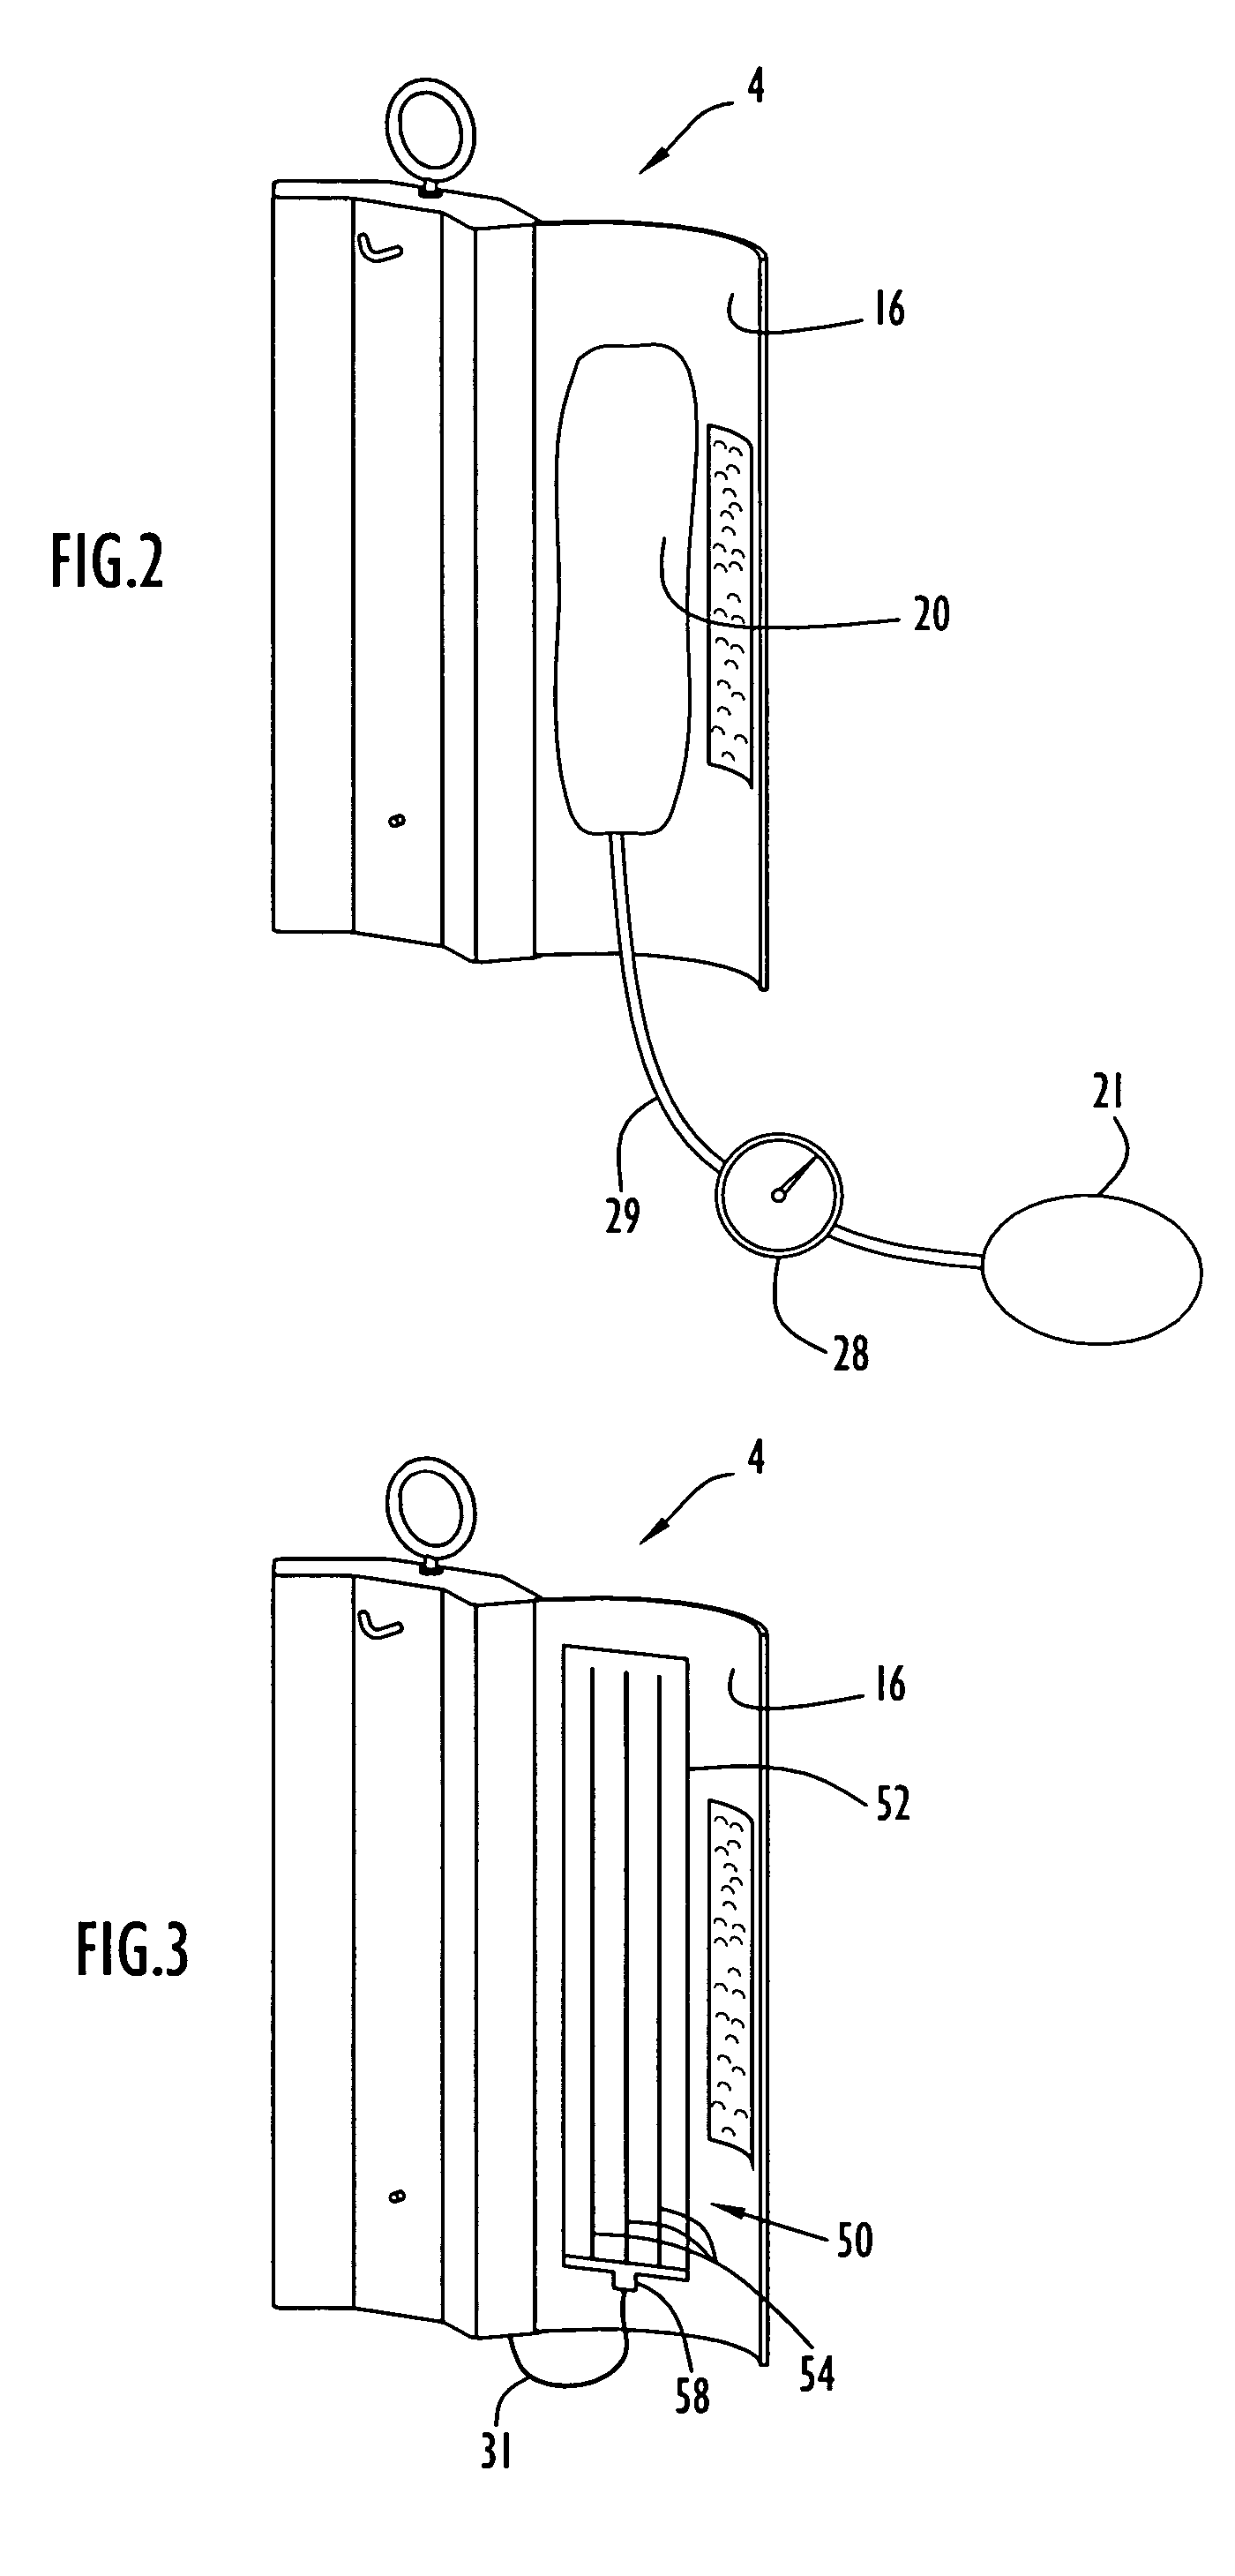 Method and apparatus for controlling temperature of infused liquids